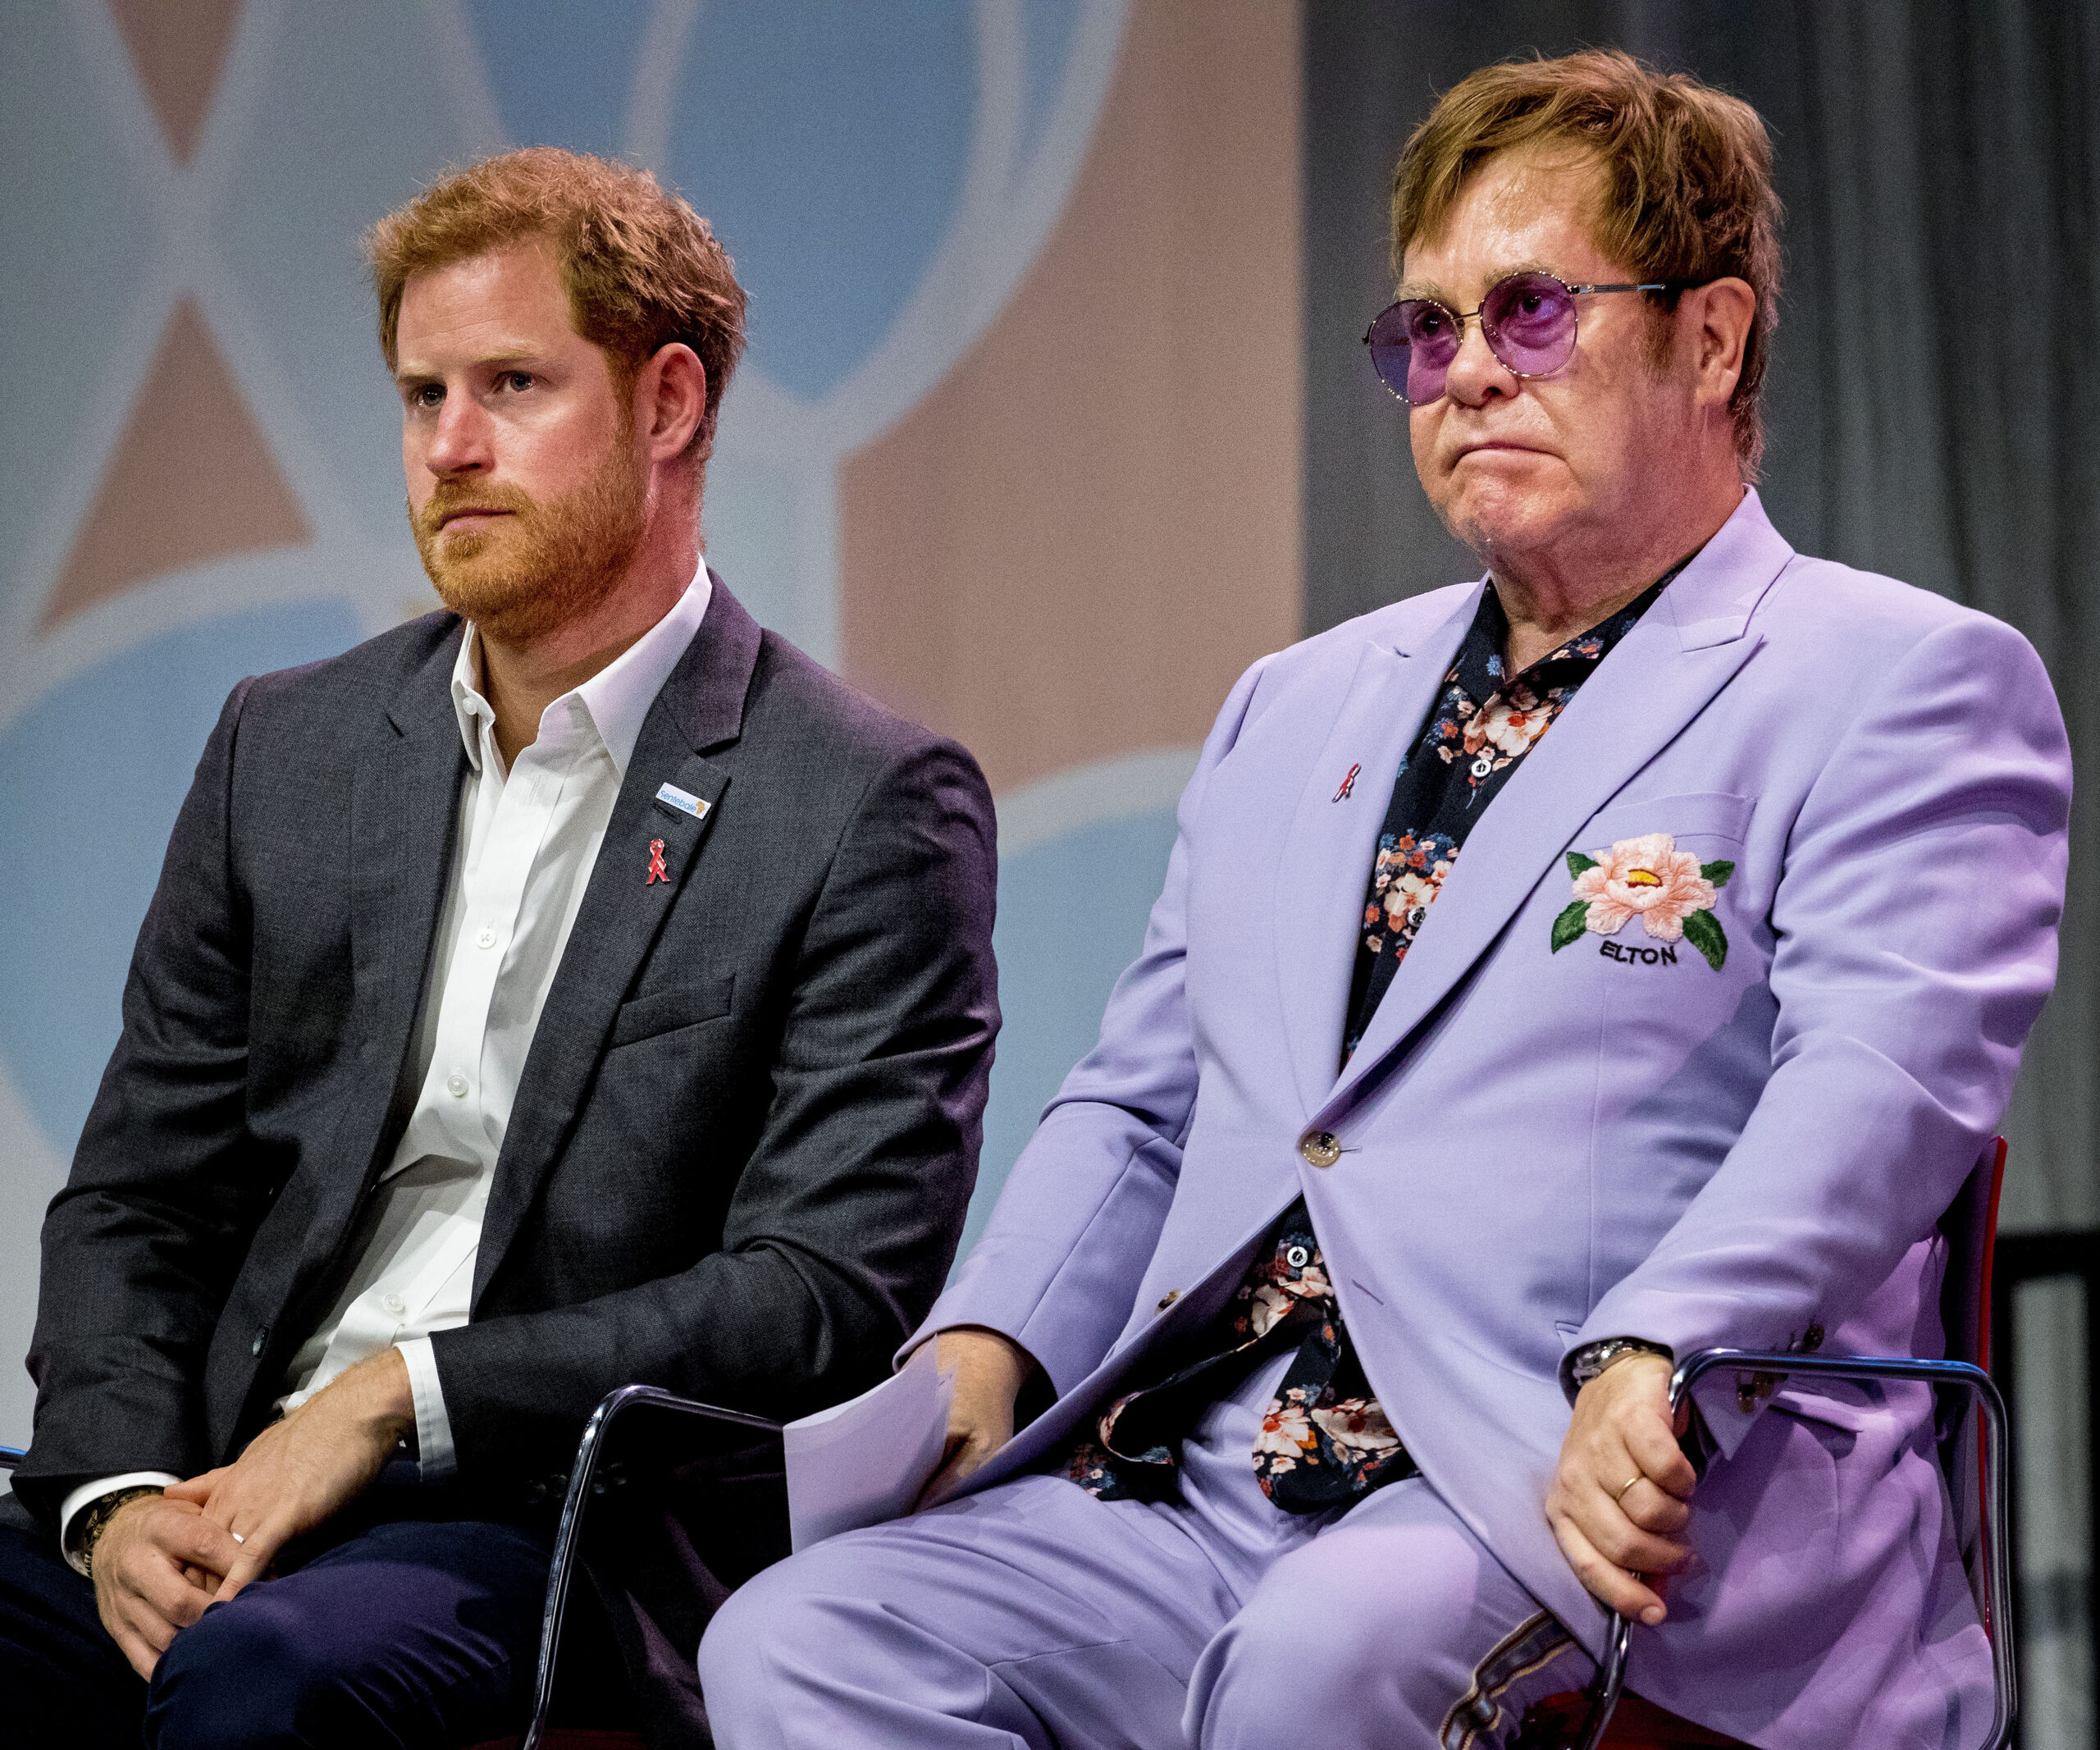 Elton John gushes about Prince Harry and Meghan Markle’s wedding: “It felt like progress”